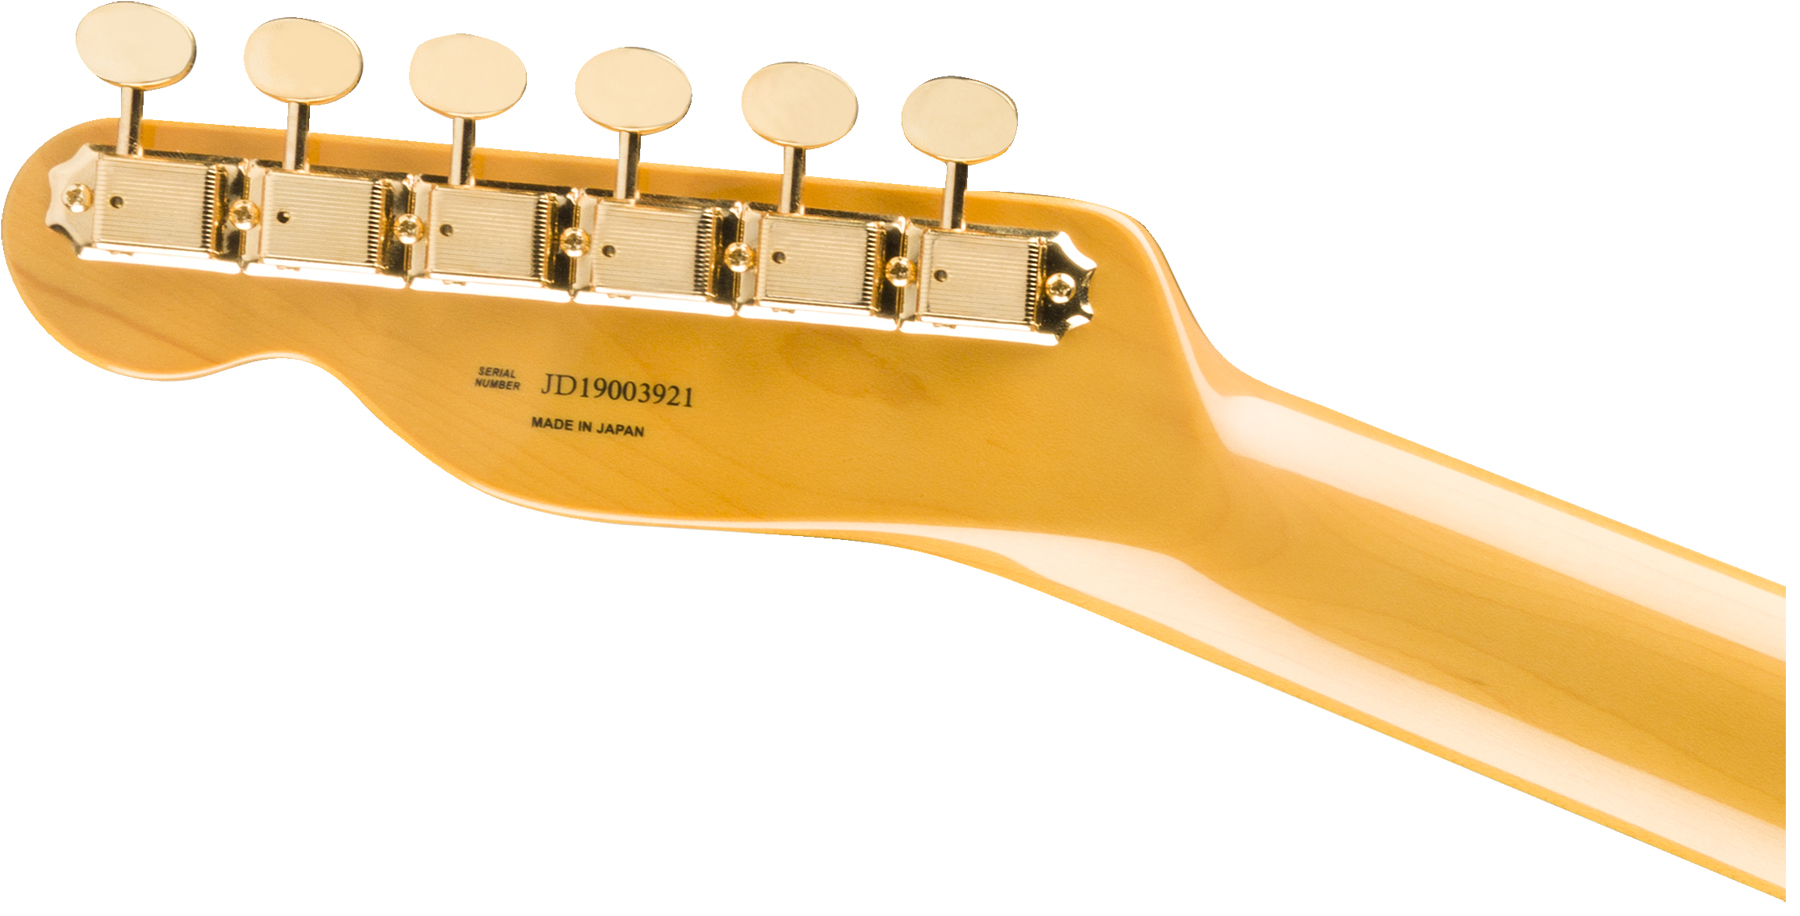 Fender Tele Daybreak Ltd 2019 Japon Gh Rw - Olympic White - Televorm elektrische gitaar - Variation 3